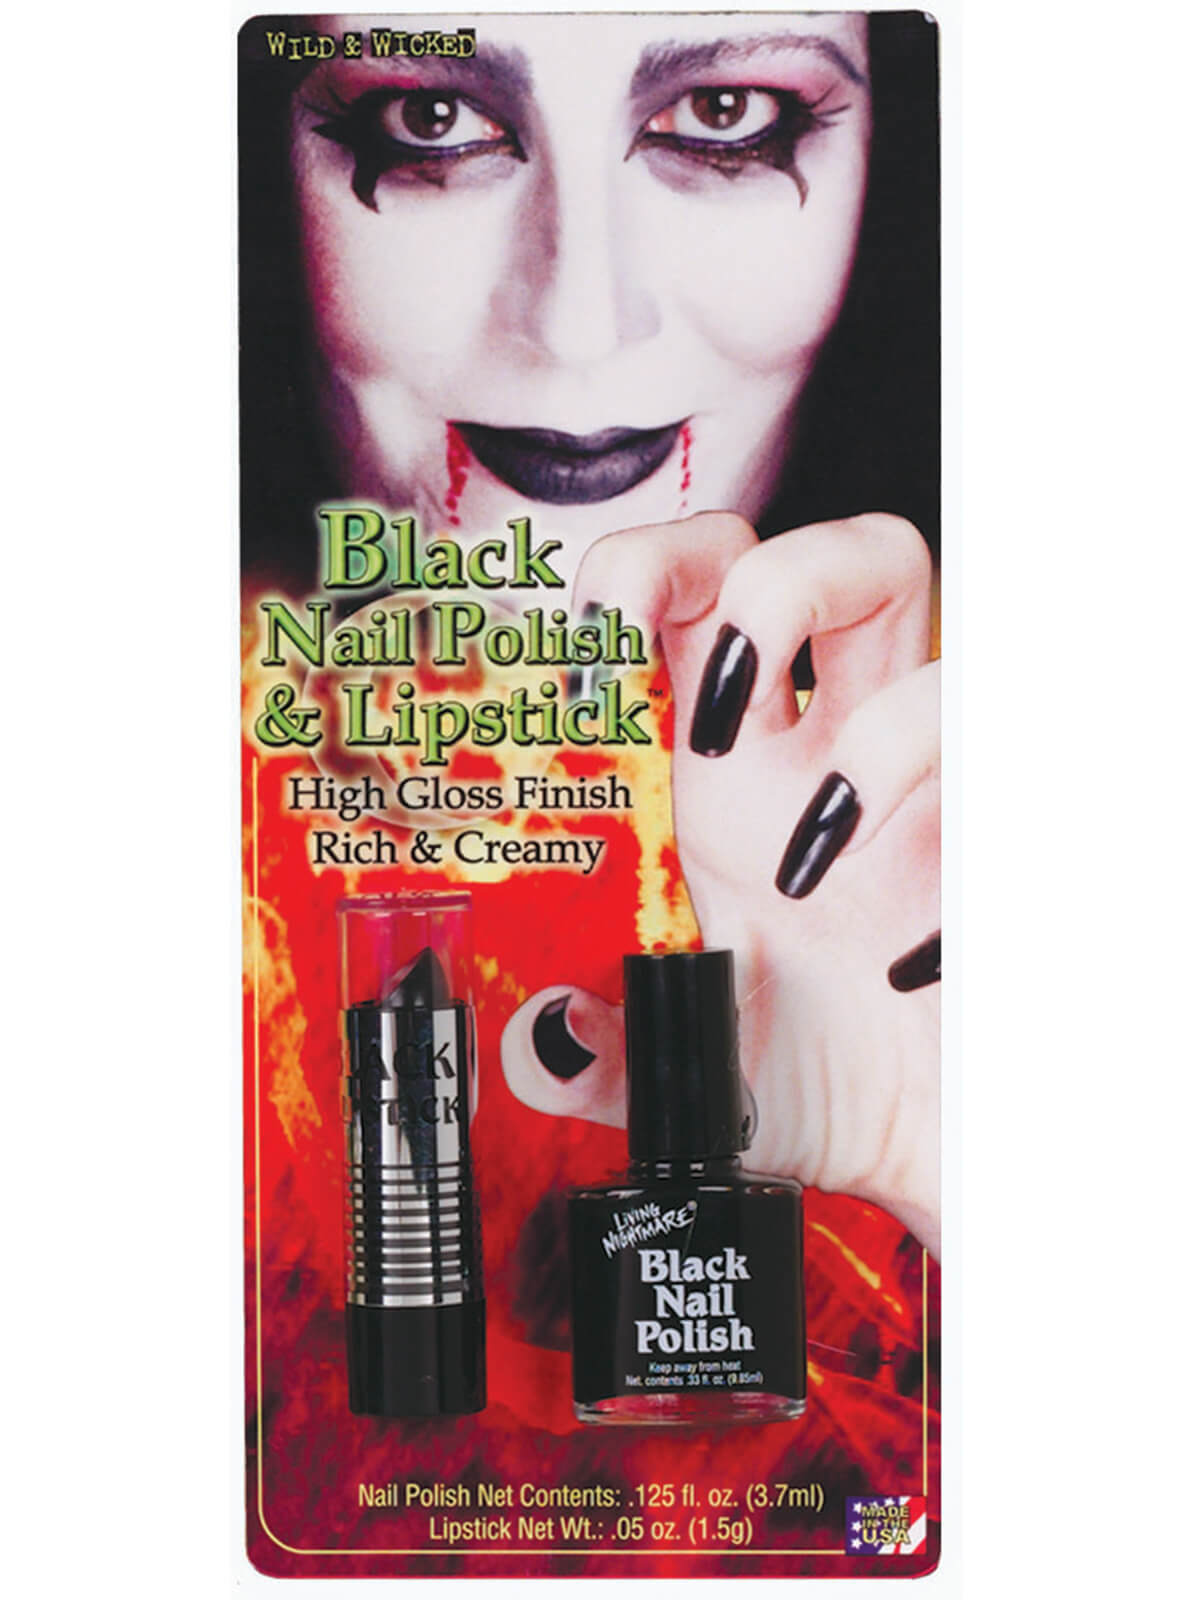 Black Nail Polish and Lipstick